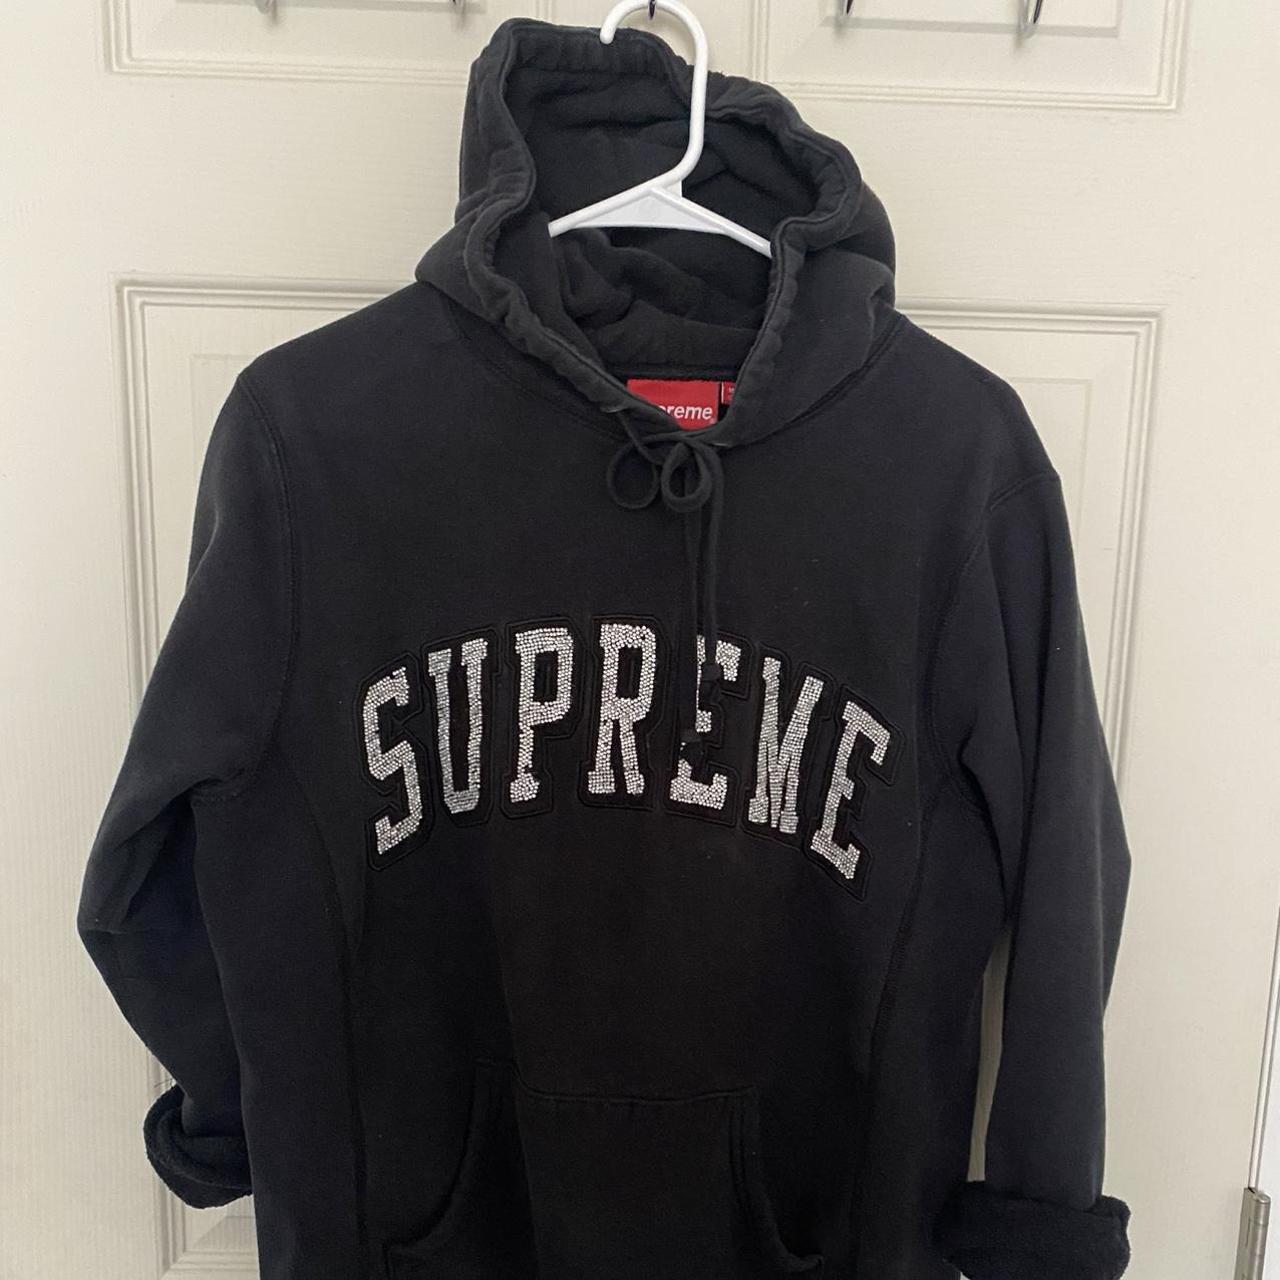 Supreme Rhinestone Hooded Sweatshirt Black